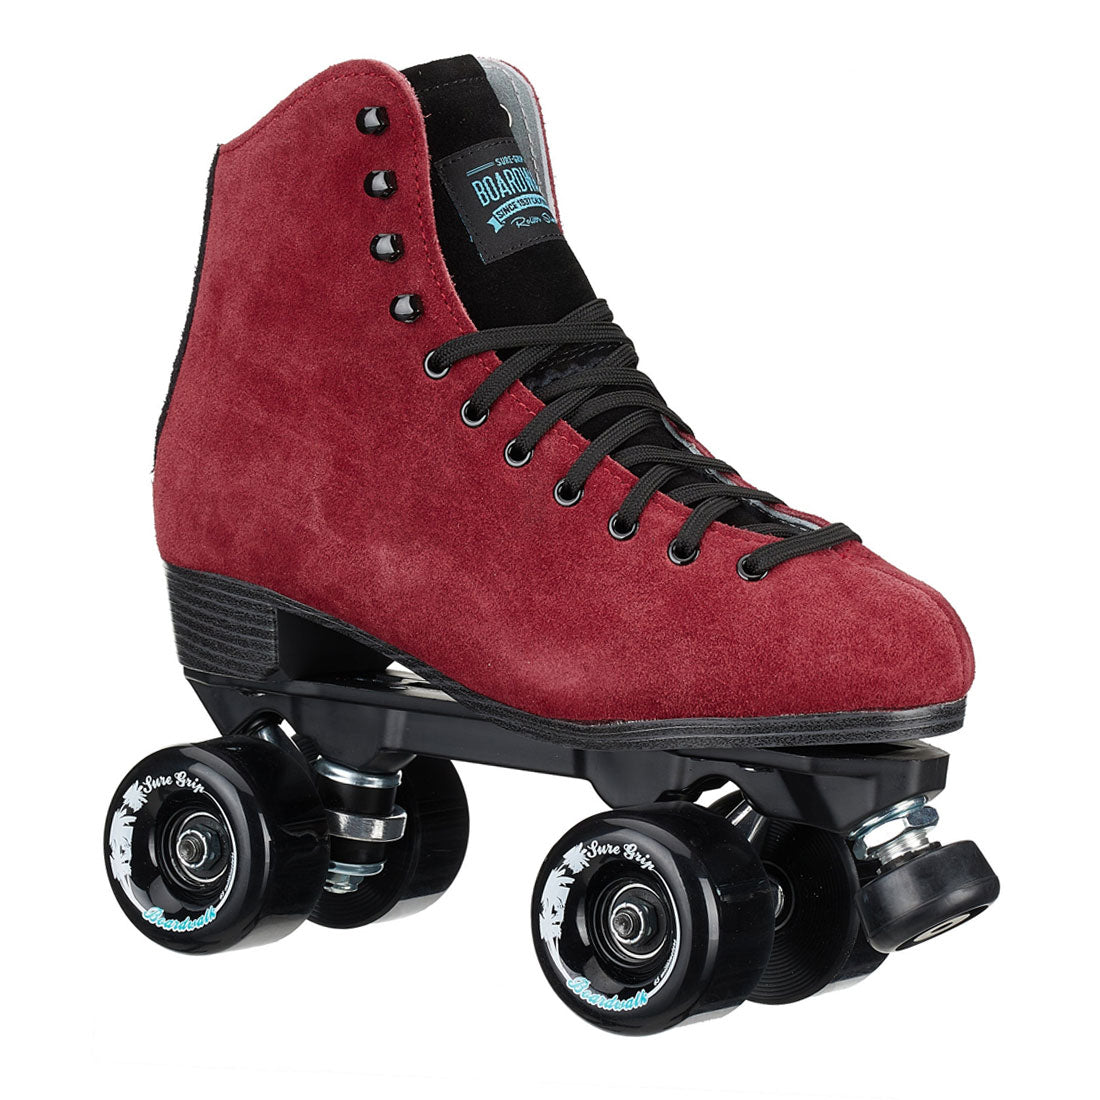 Sure-Grip Boardwalk Skate - Merlot Red Roller Skates